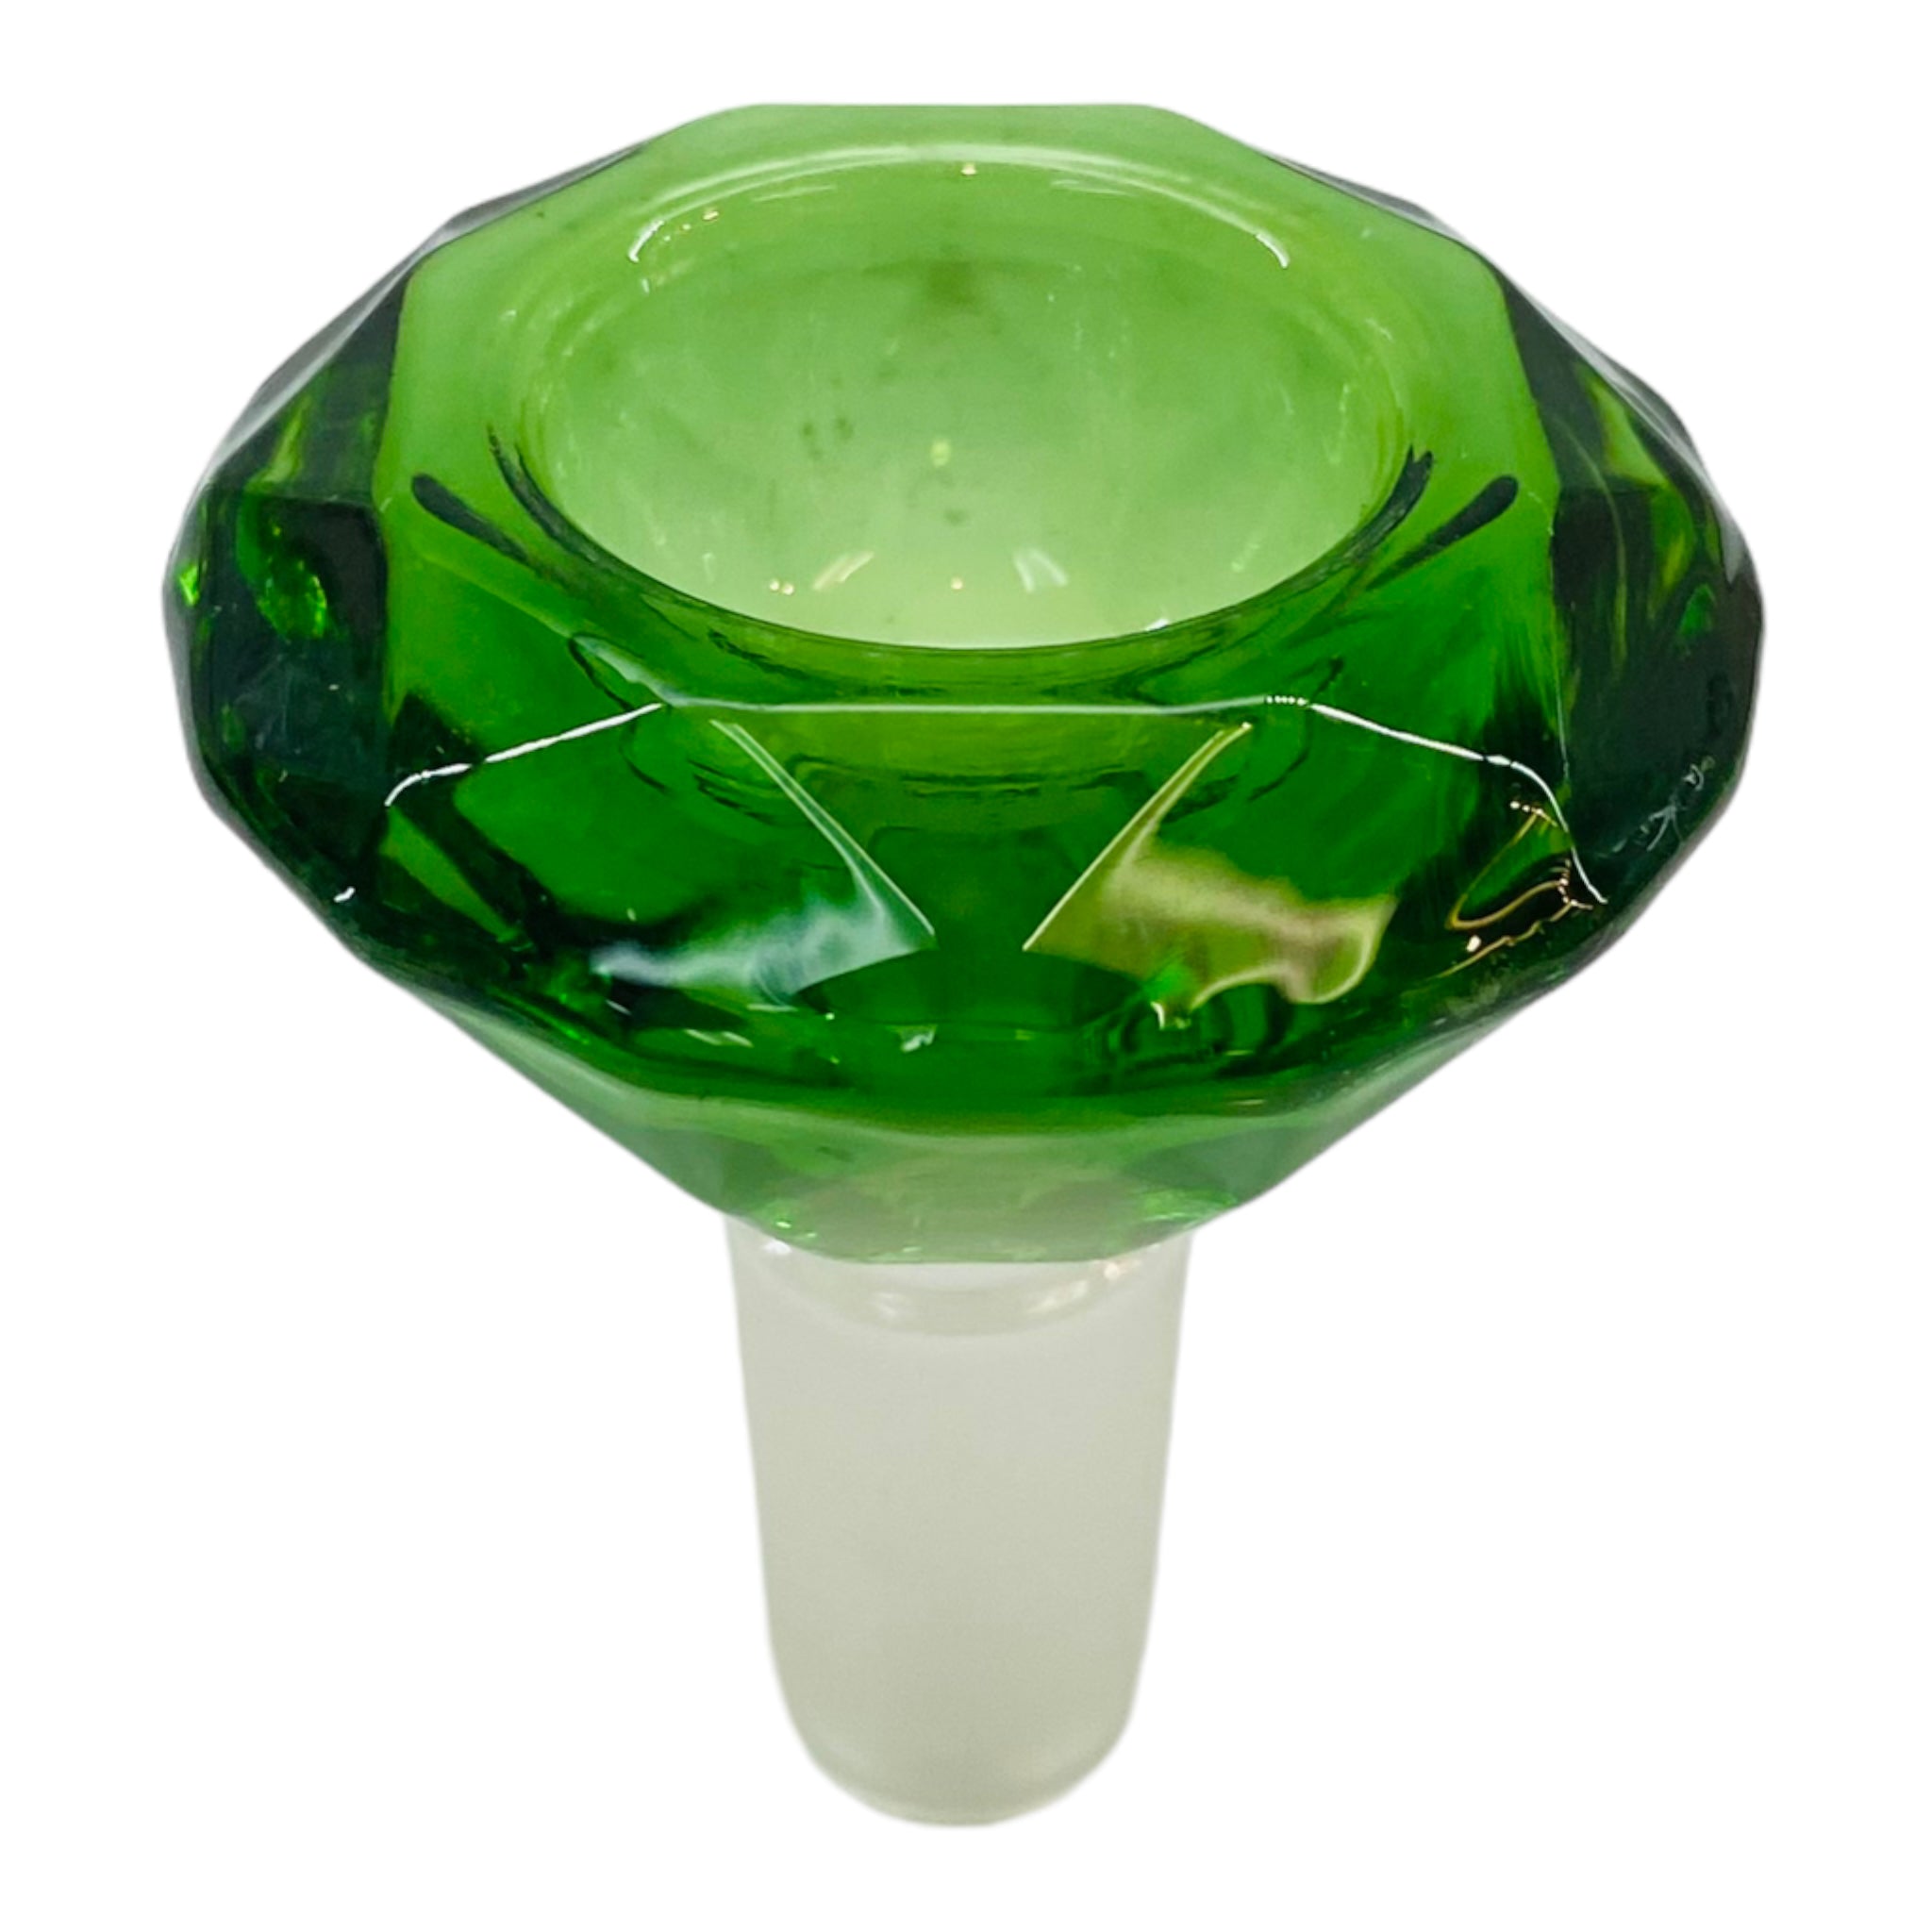 14mm Flower Bowl - Faceted Diamond Glass Bong Bowl Piece - Green